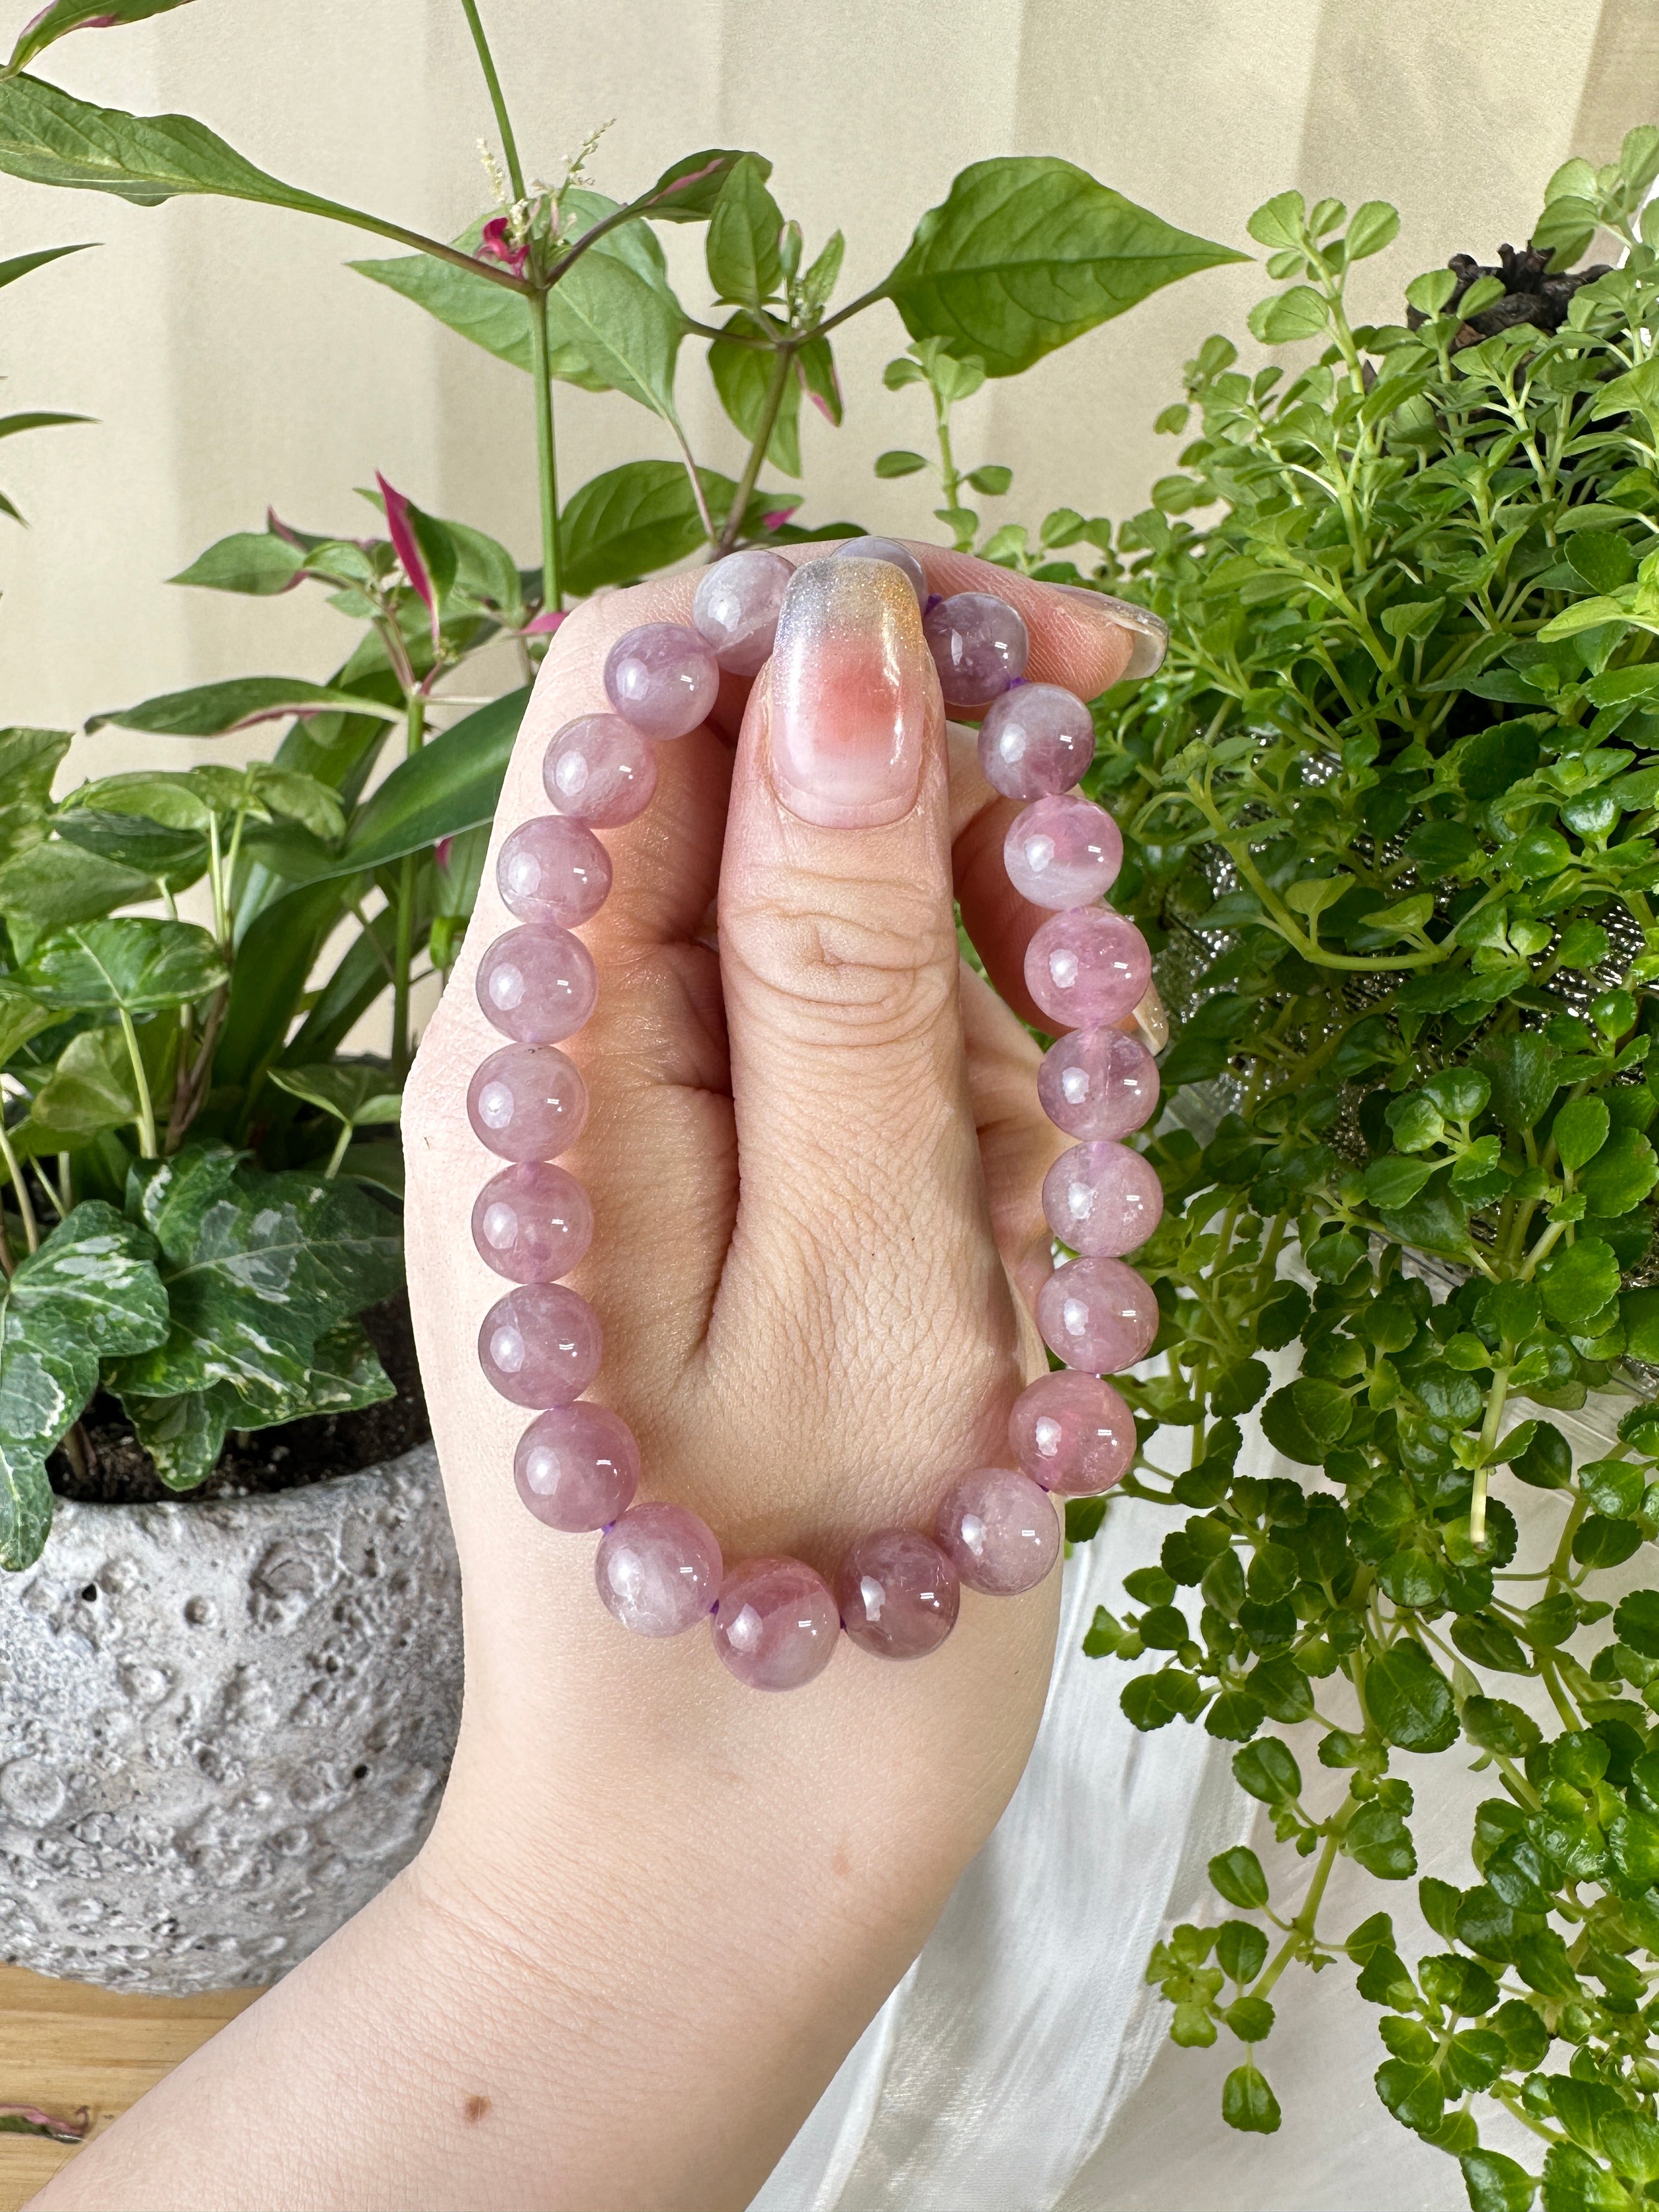 Purple Madagascar Rose Quartz Beaded Bracelet 8MM ★WYSIWYG★